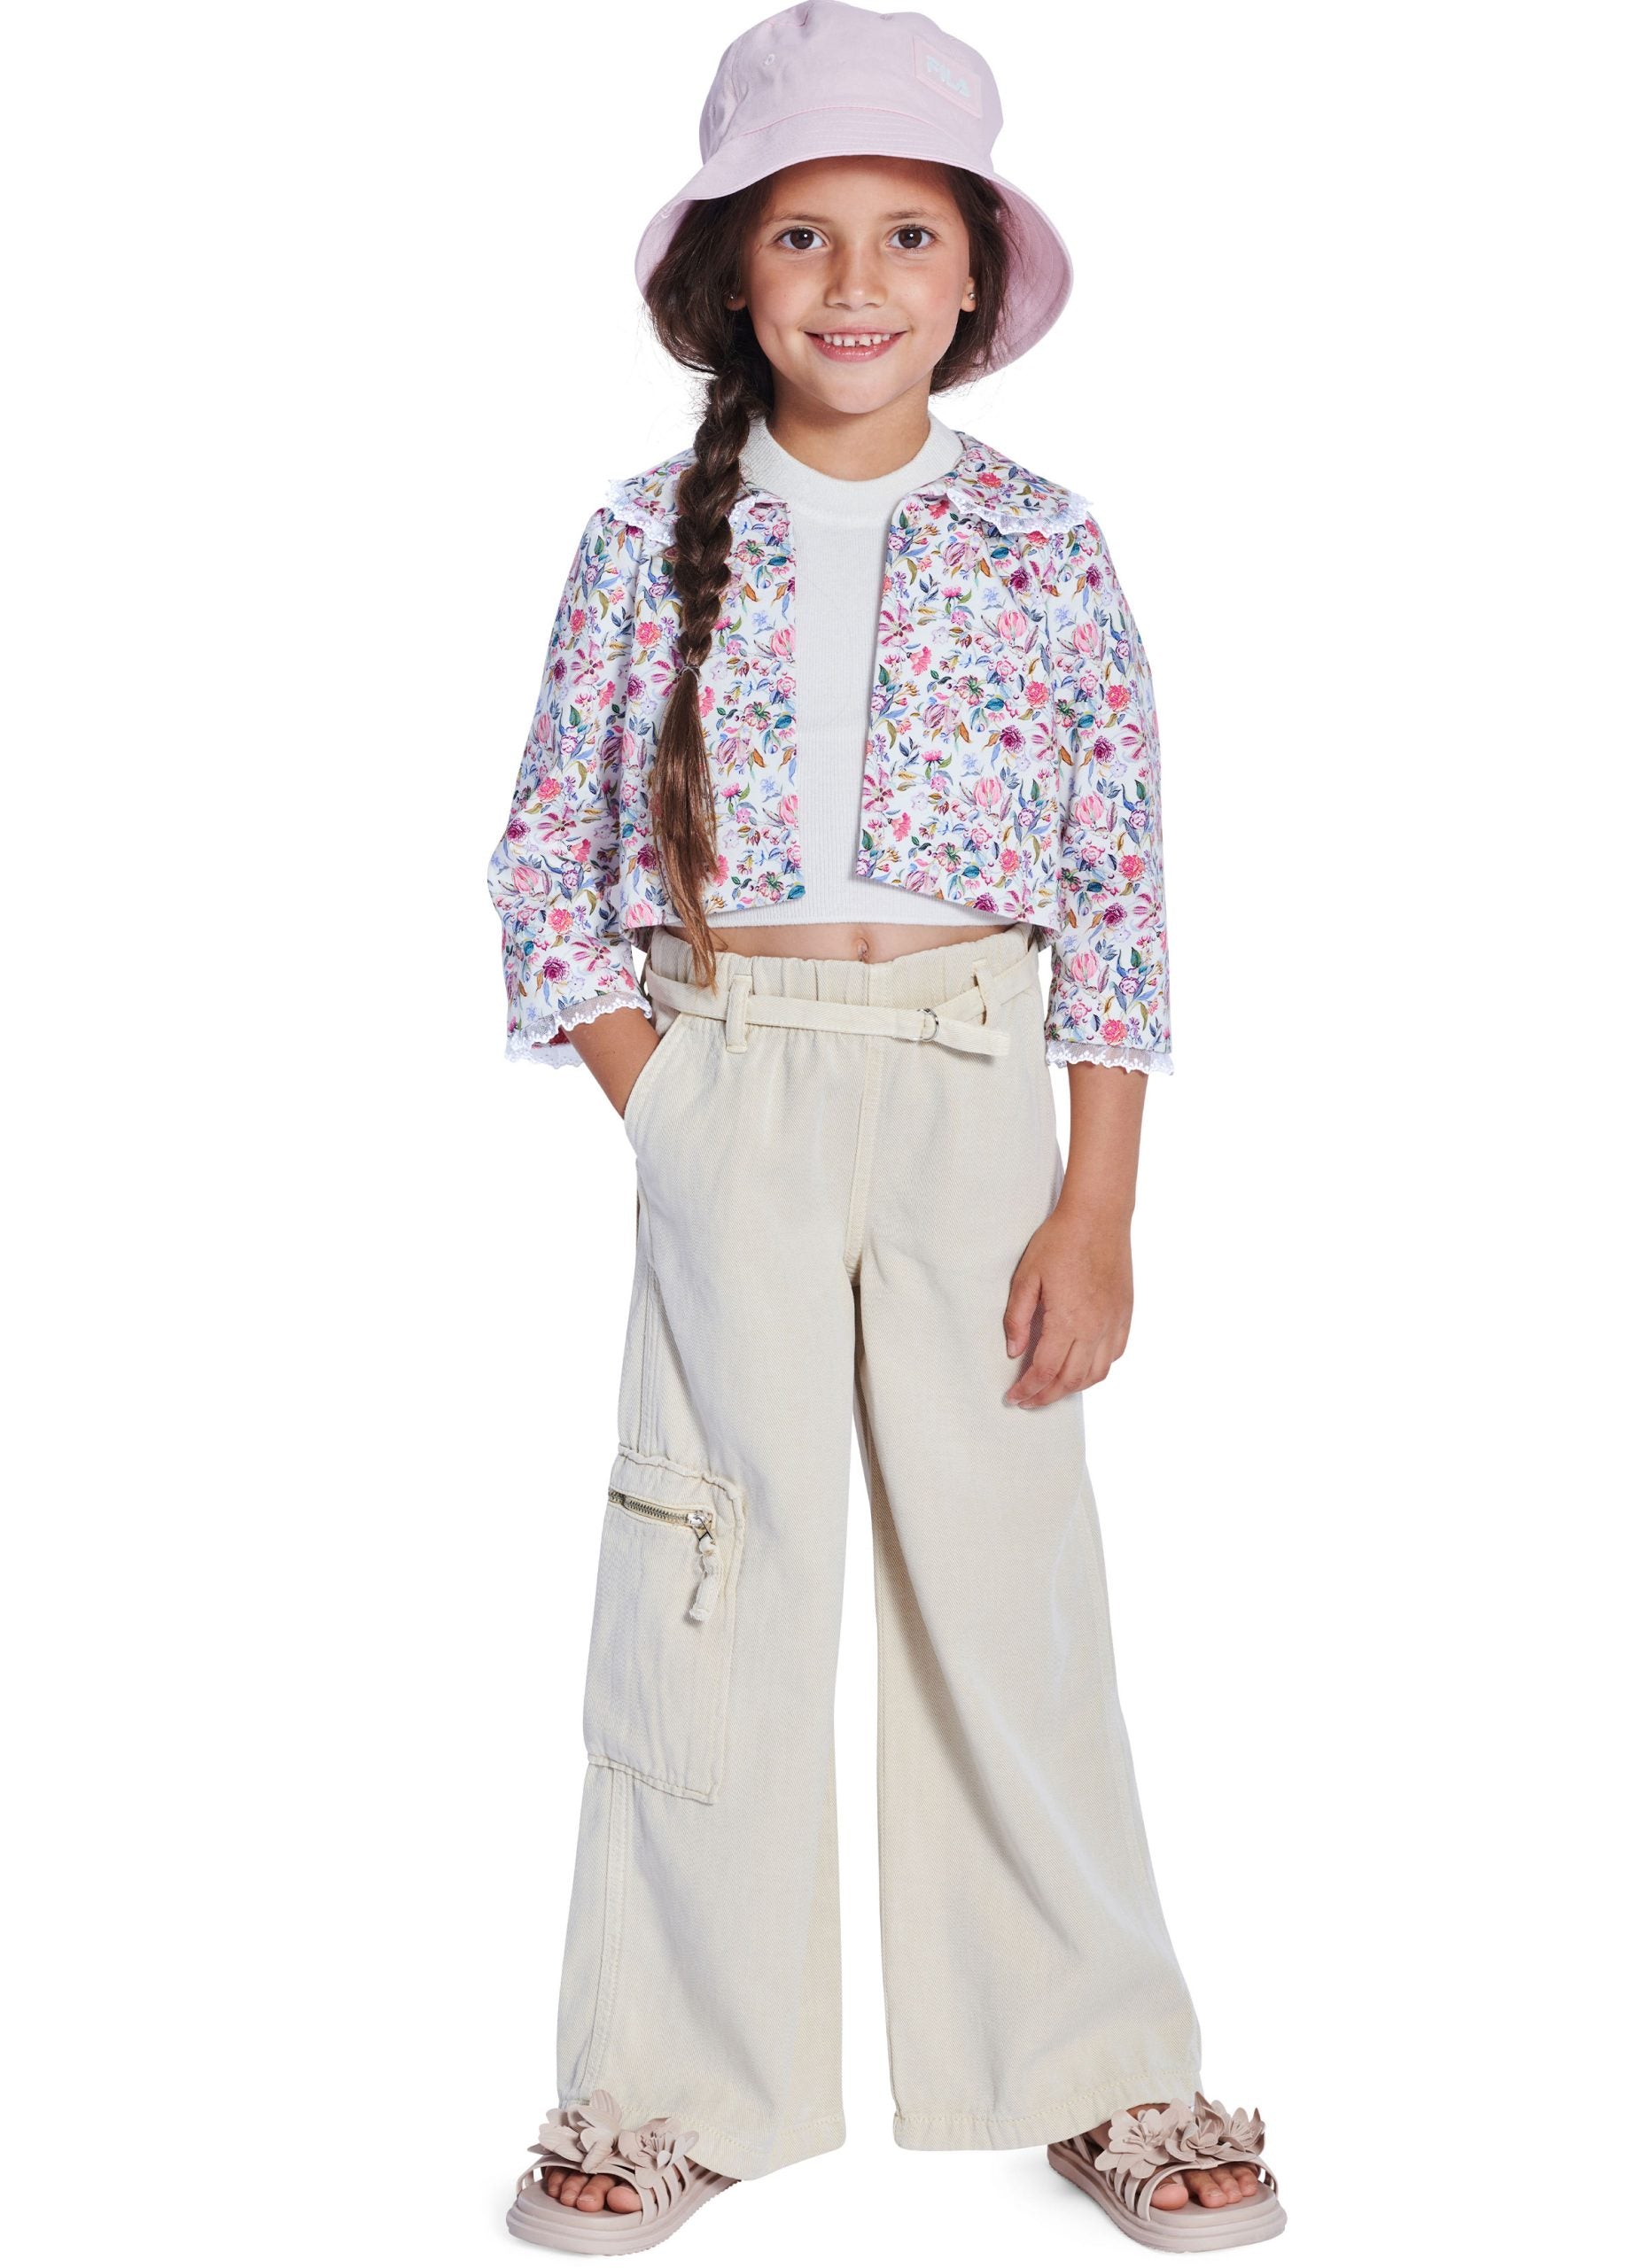 Burda Child Dress & Jacket 9225